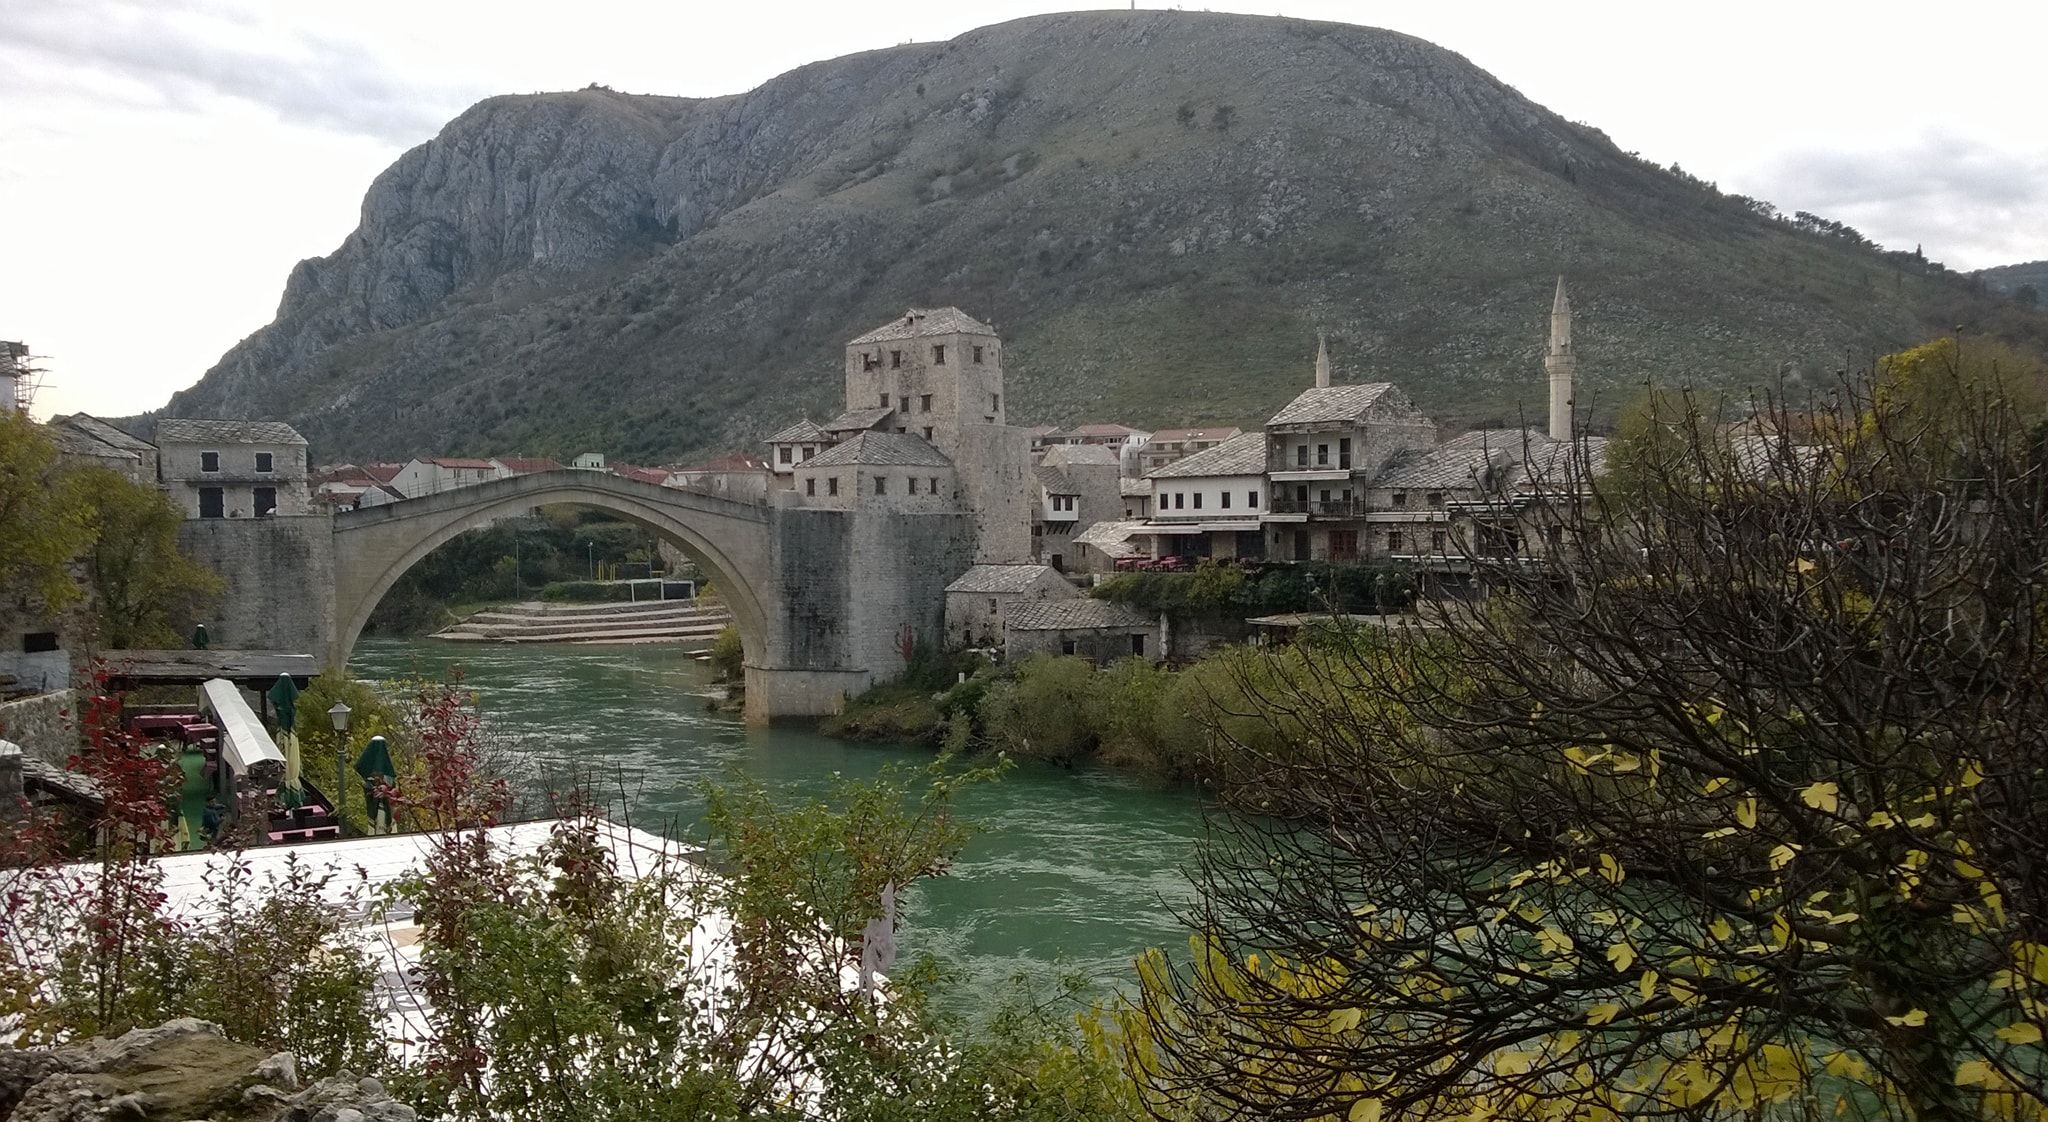 The Old Bridge ( Stari Most ) in Mostar in Bosnia